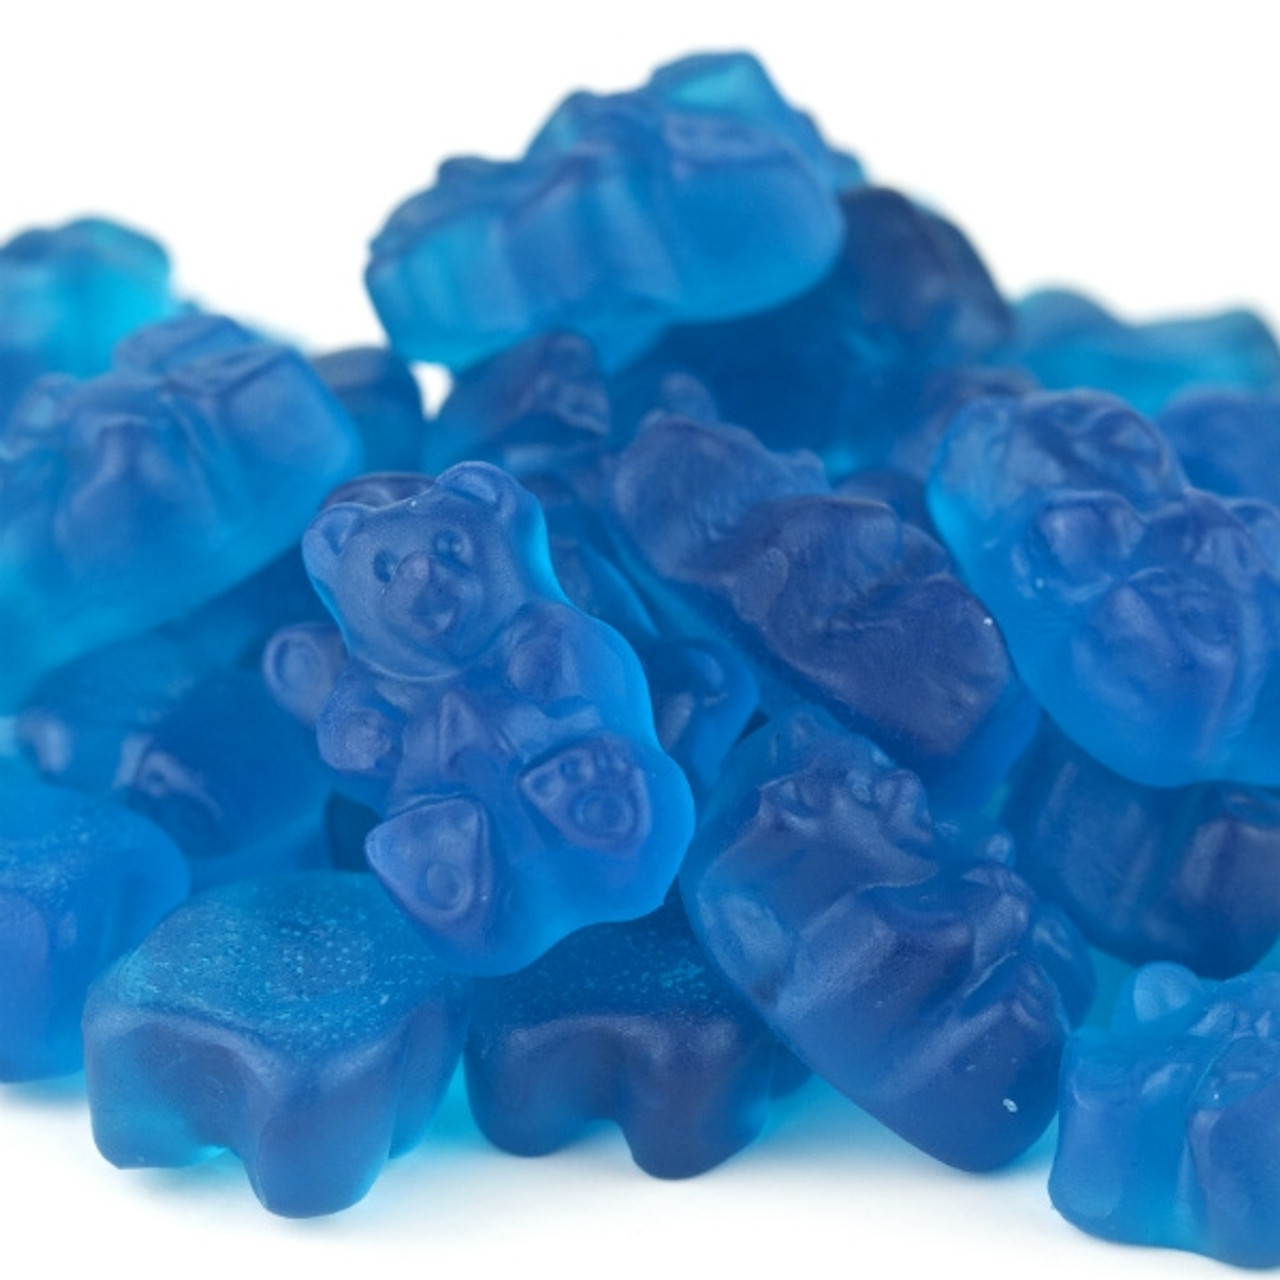 The Original Giant Gummy Bear Candy - Blue Raspberry